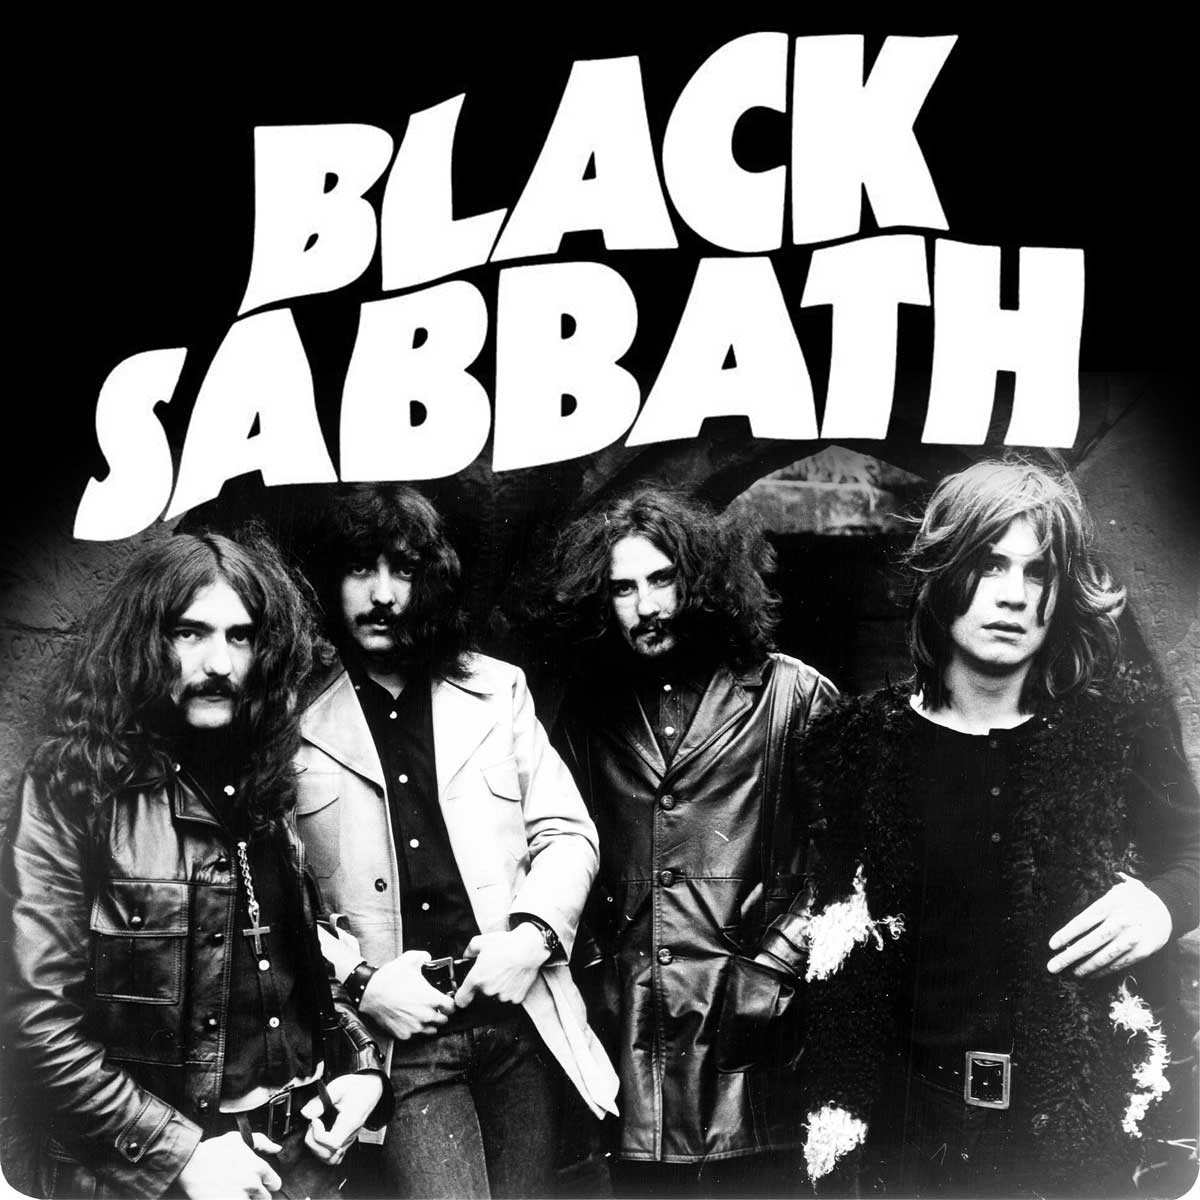 Black Sabbath Collection FLAC eNJoY iT